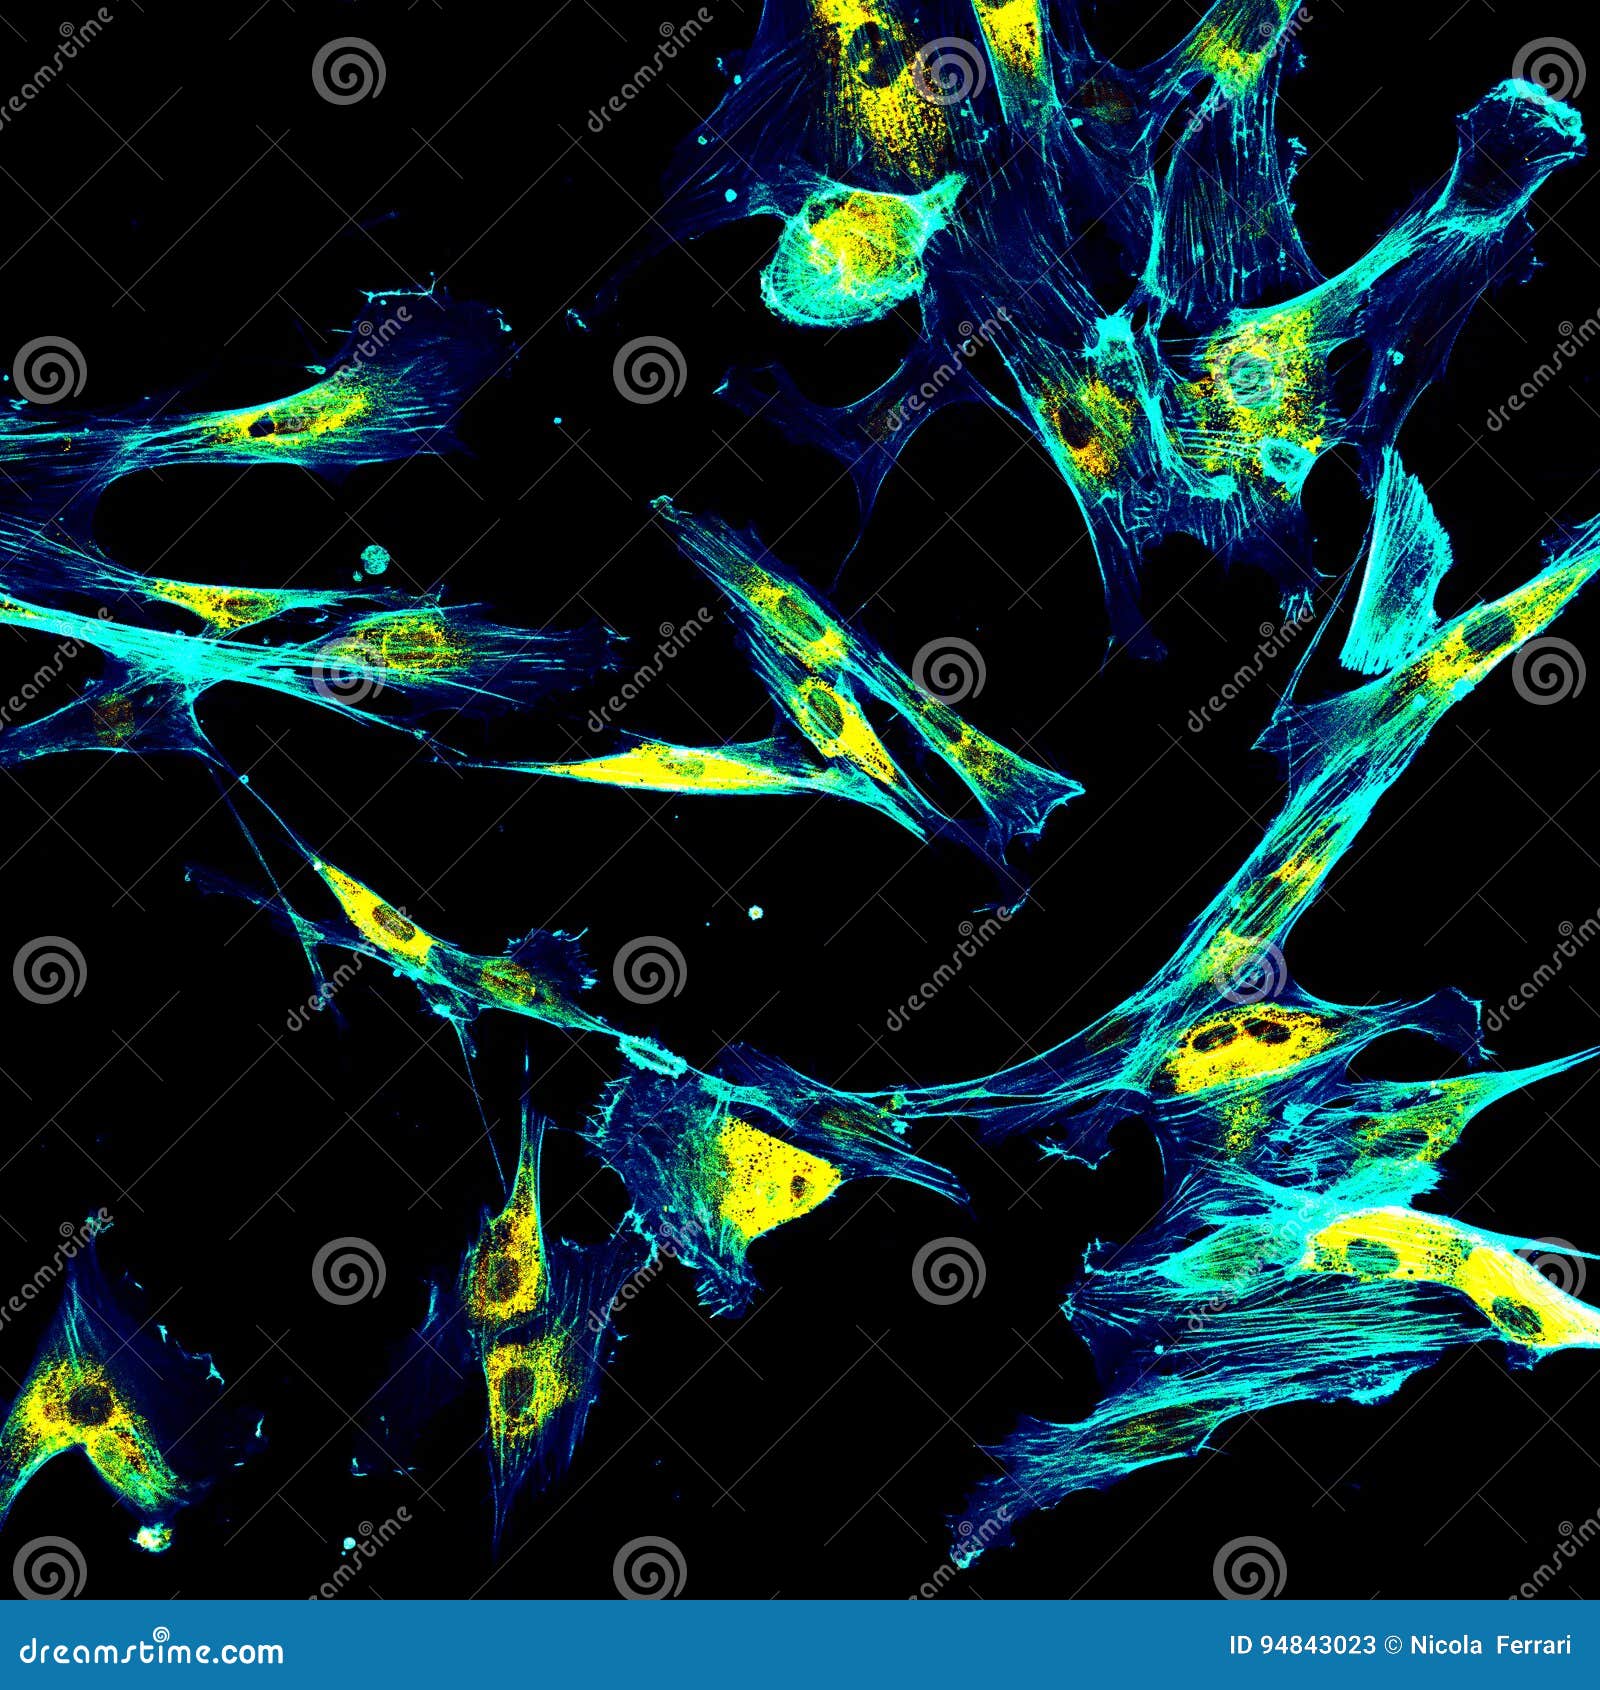 immunofluorescence confocal imaging of fibroblasts